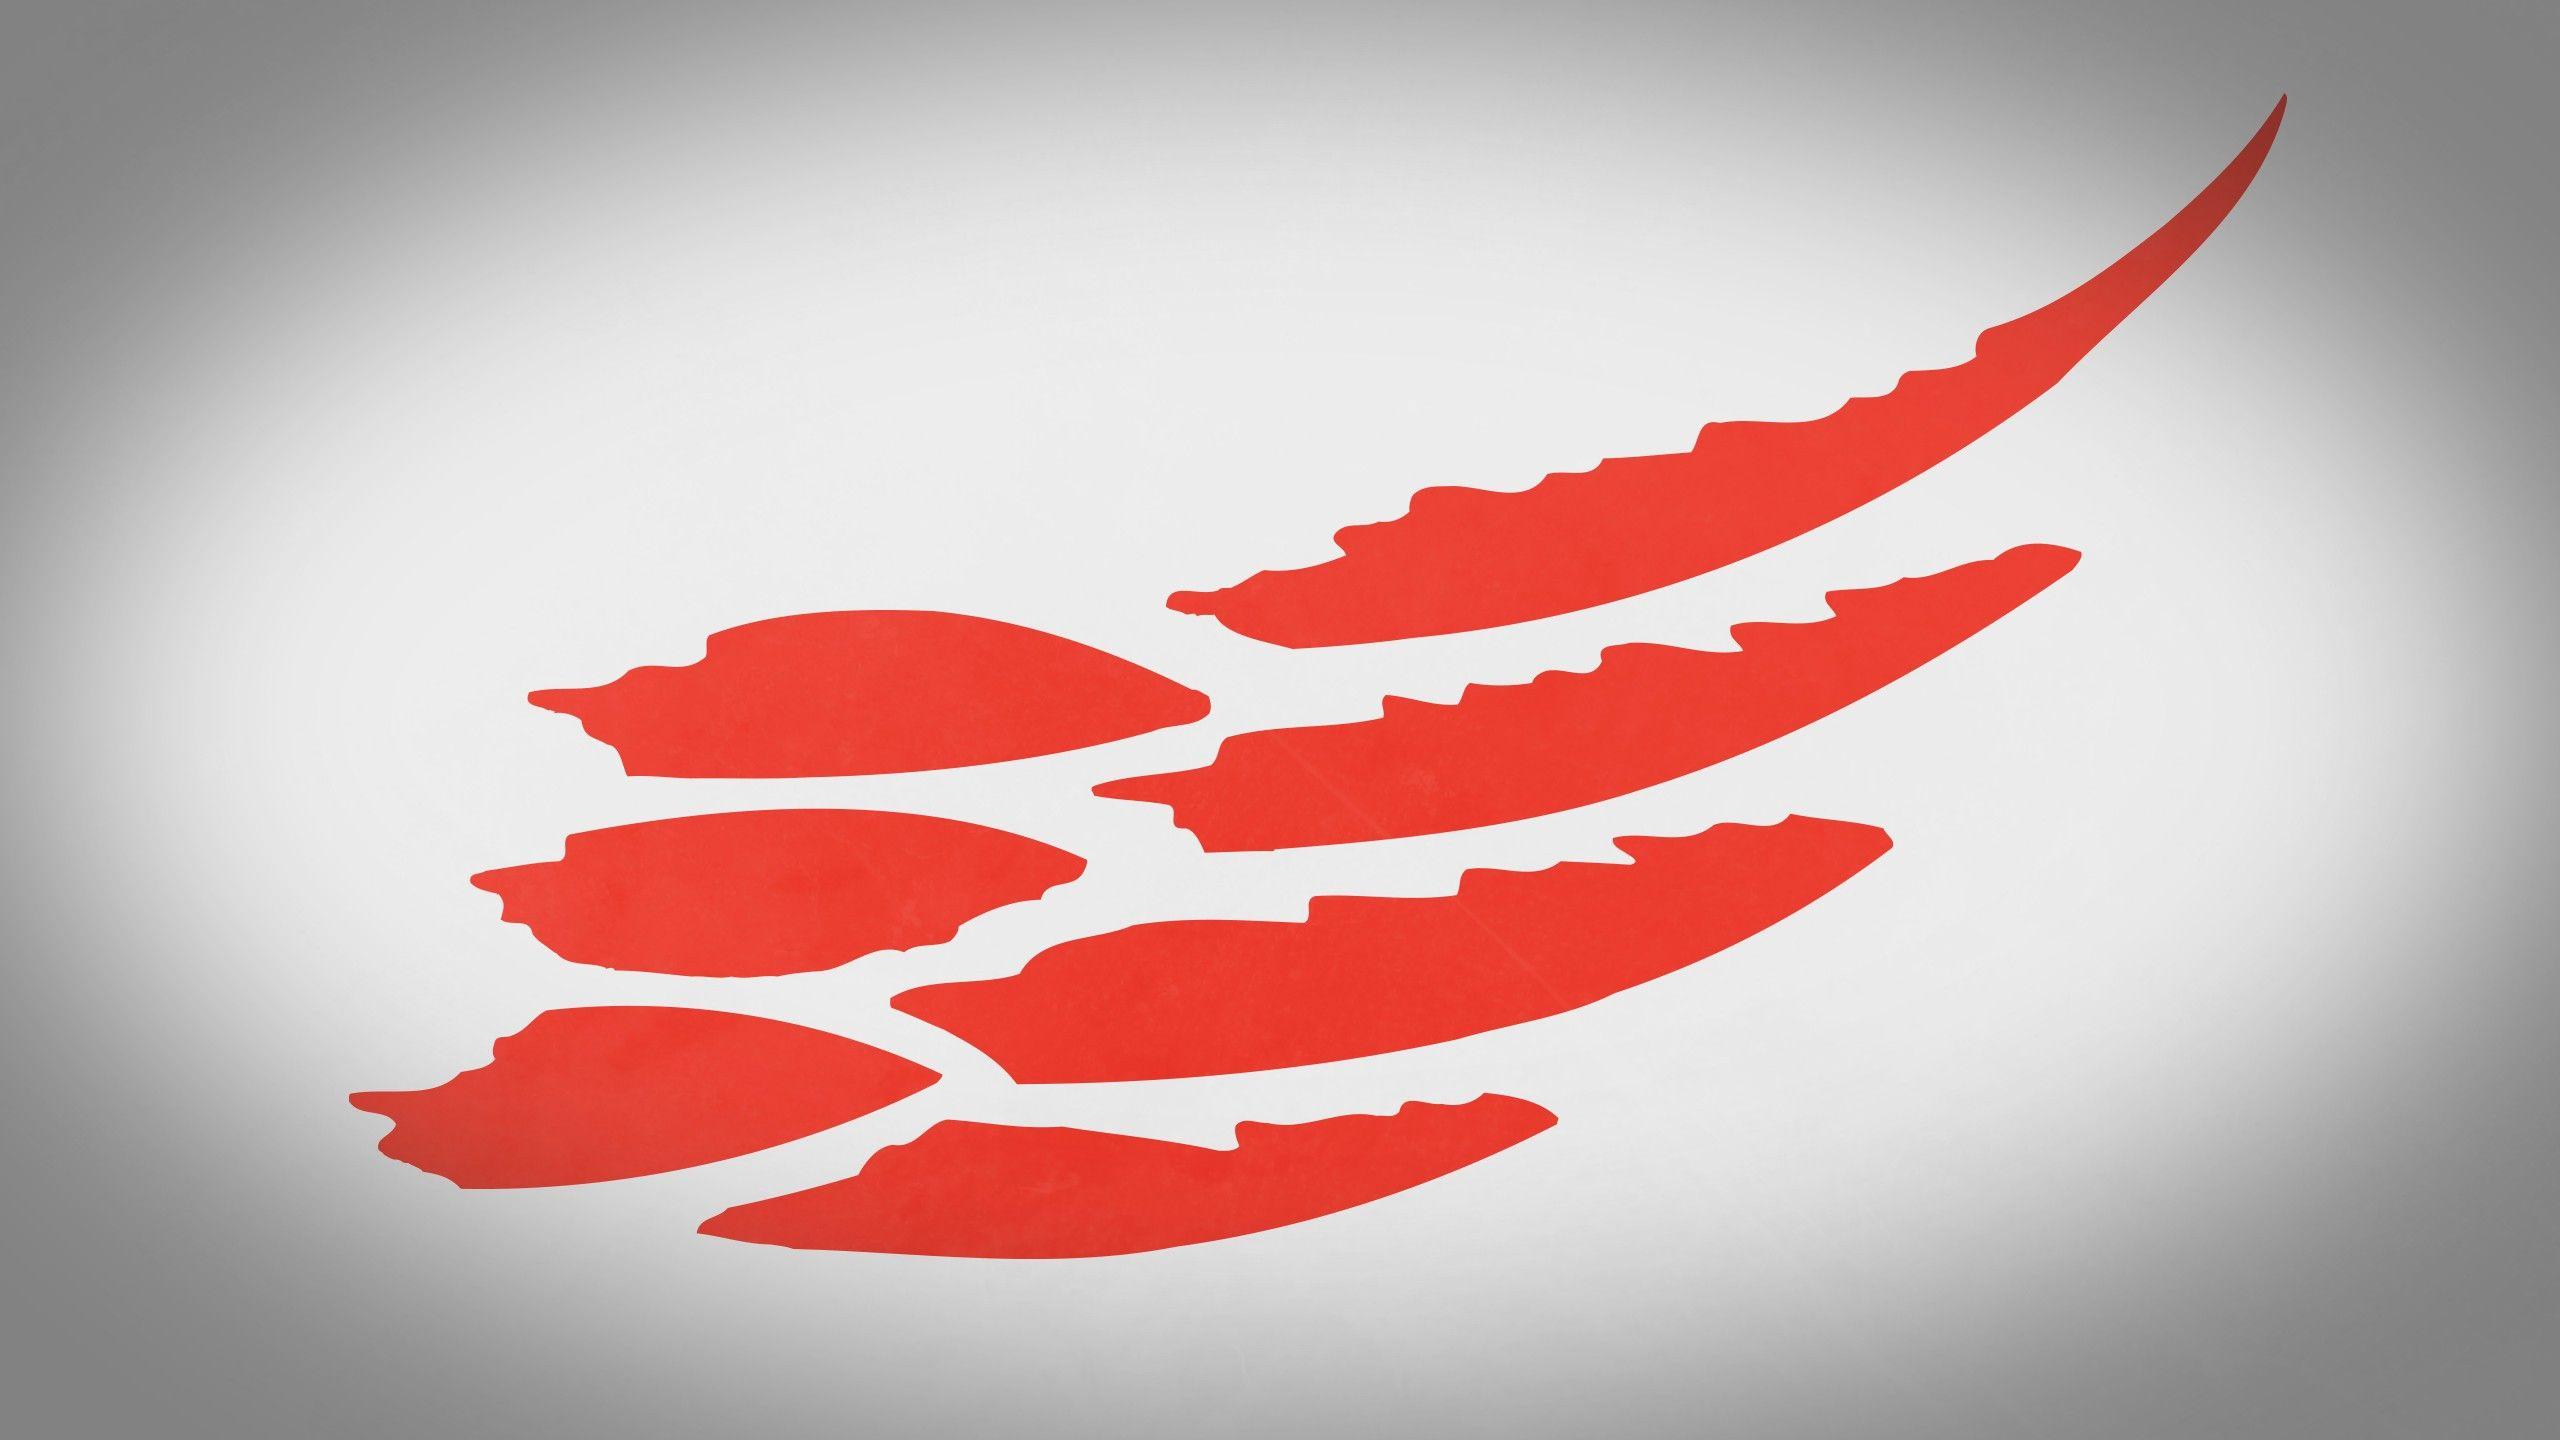 Free Detroit Red Wings Wallpaper Designs & Trivia!